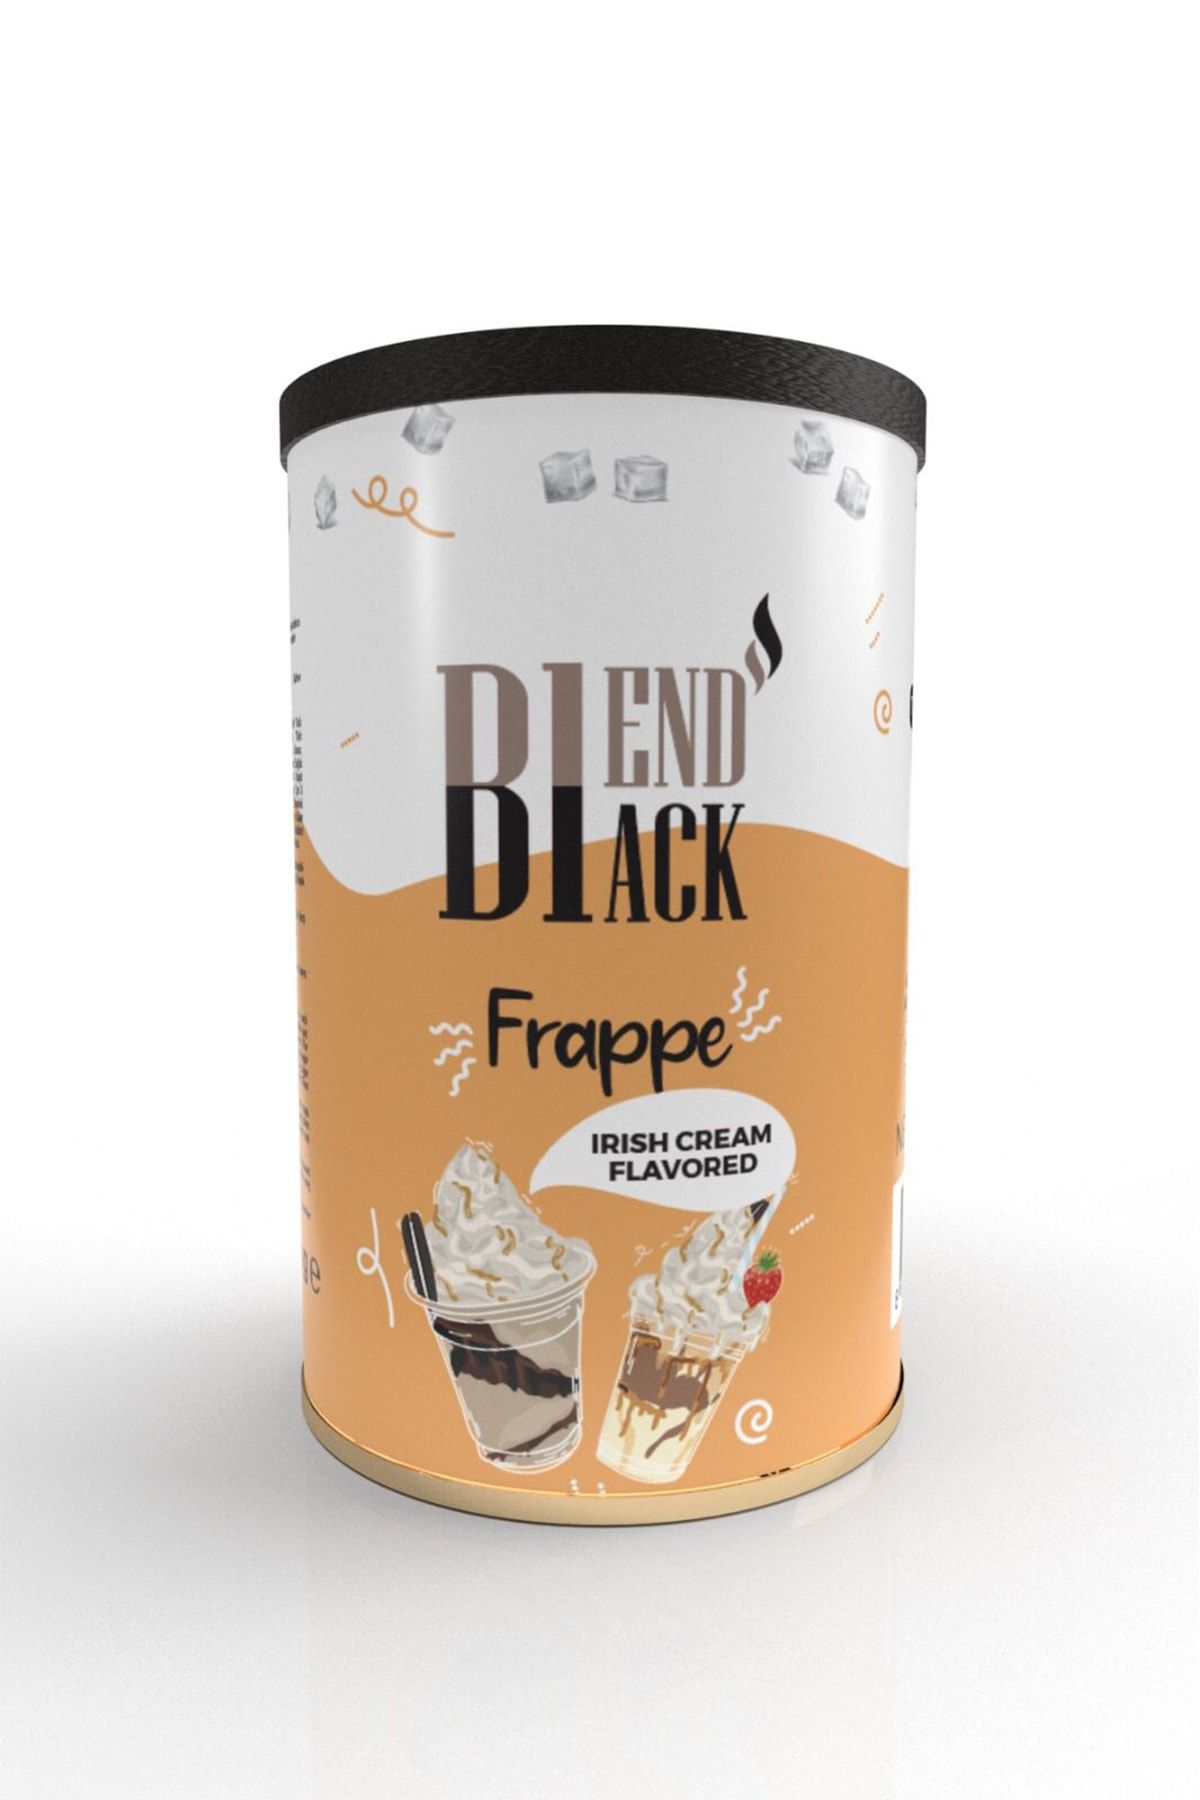 Blendblack Frappe Irish Cream Flavored 500gr Teneke Kutu